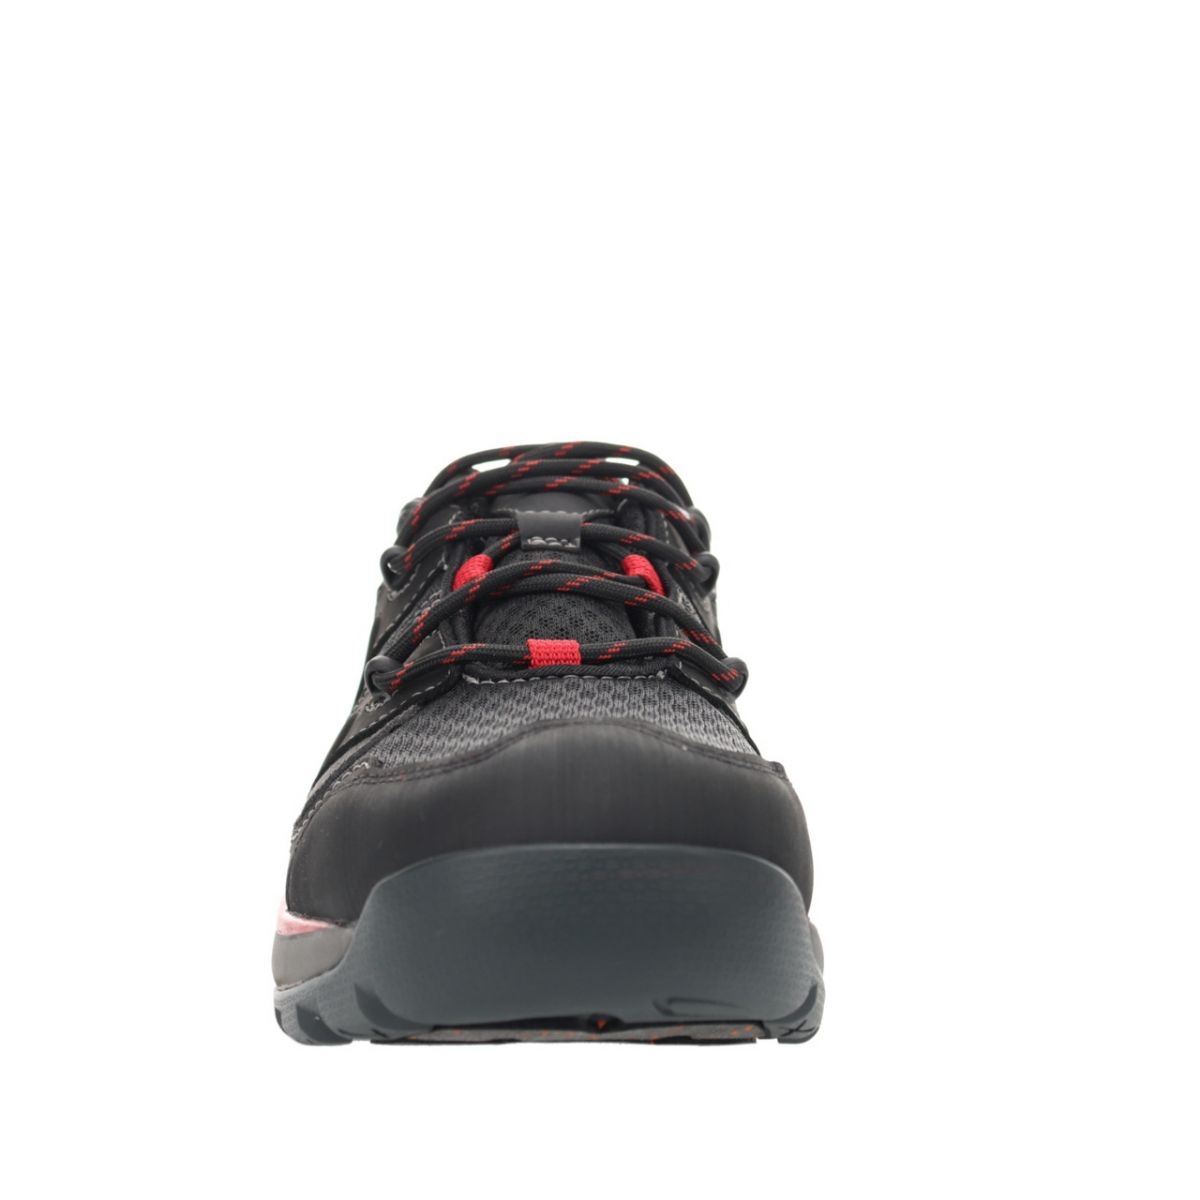 Propet Men's Vercors Hiking Shoe Black/Red - MOA002SBRD BLACK/RED - BLACK/RED, 8 XX-Wide